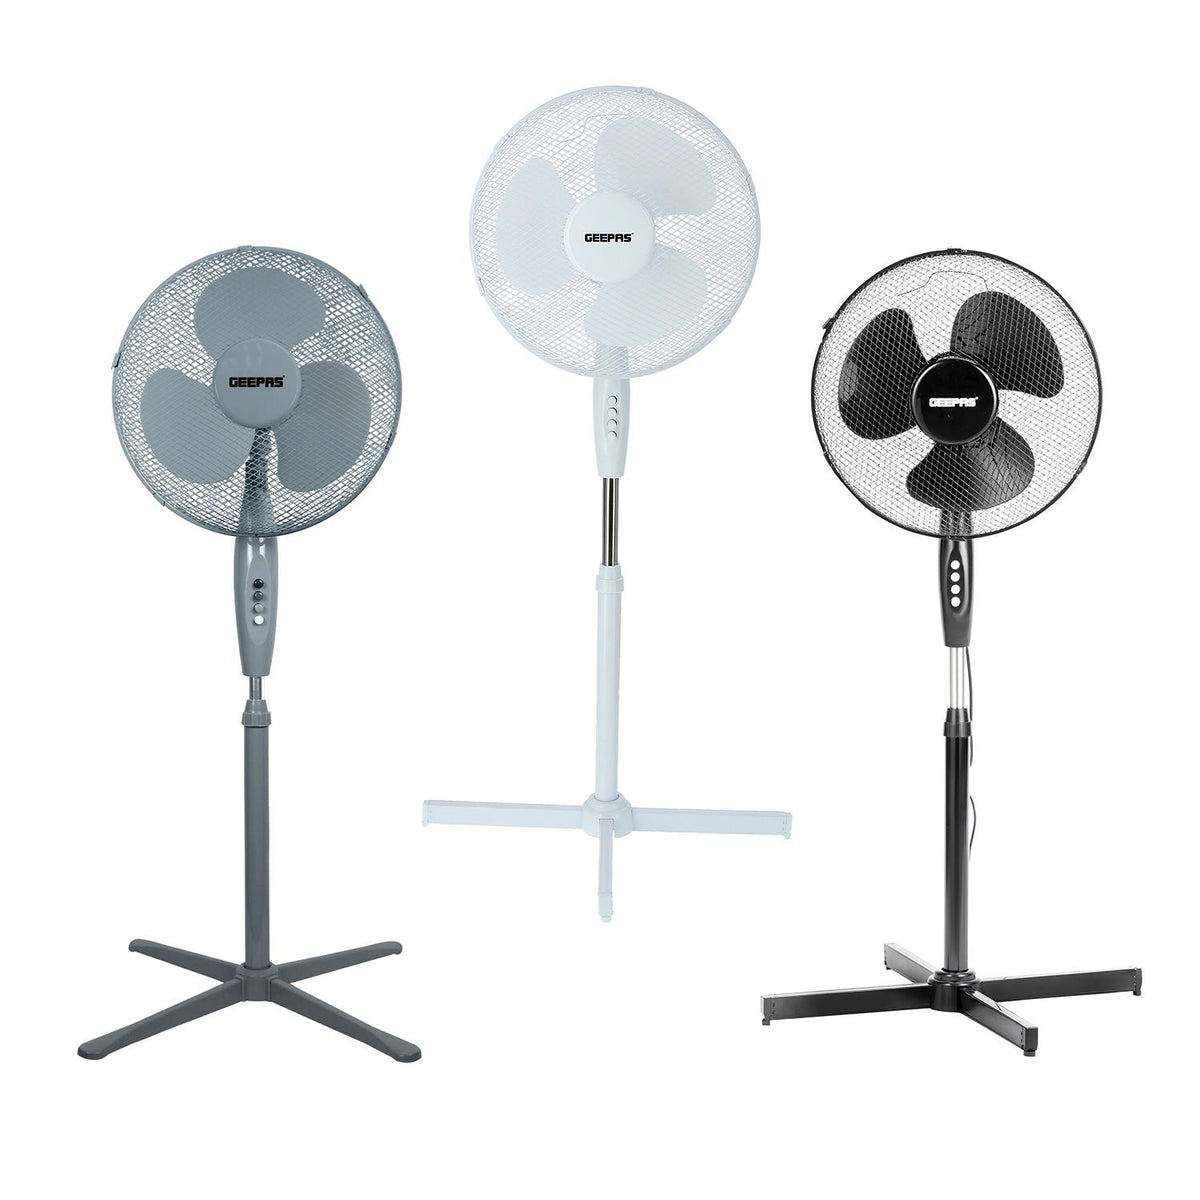 16-Inch Standing Pedestal Fan With Oscillation (White, Grey, Black)